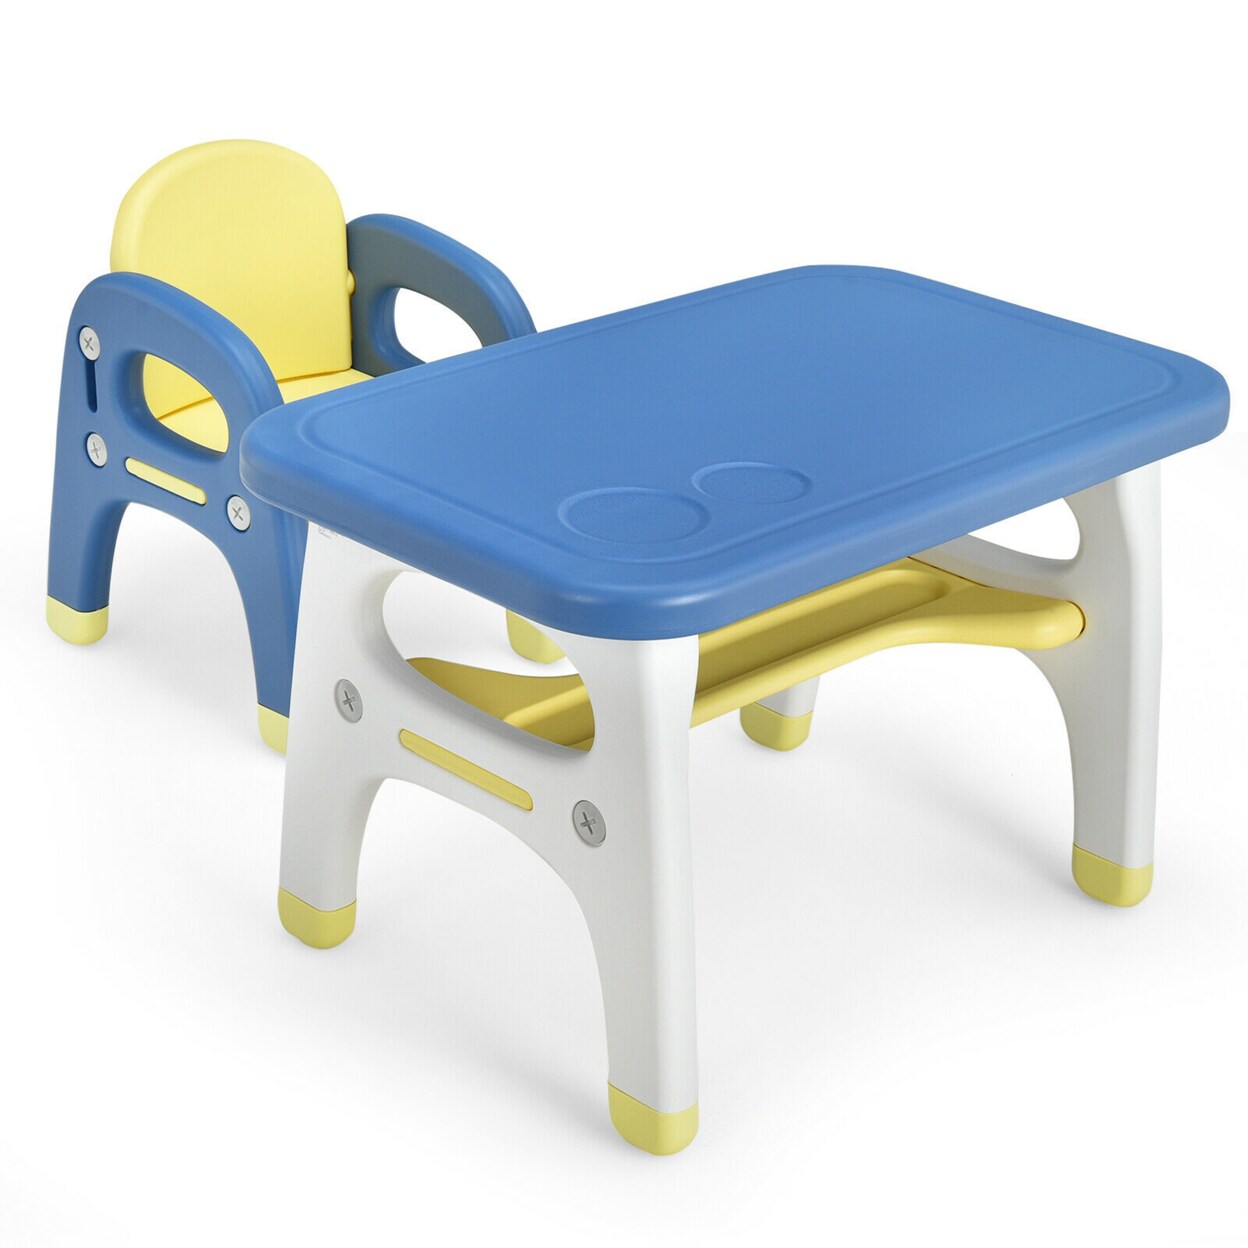 Gymax Kids Dinosaur Table and Chair Set Activity Study Desk w/ Building Blocks